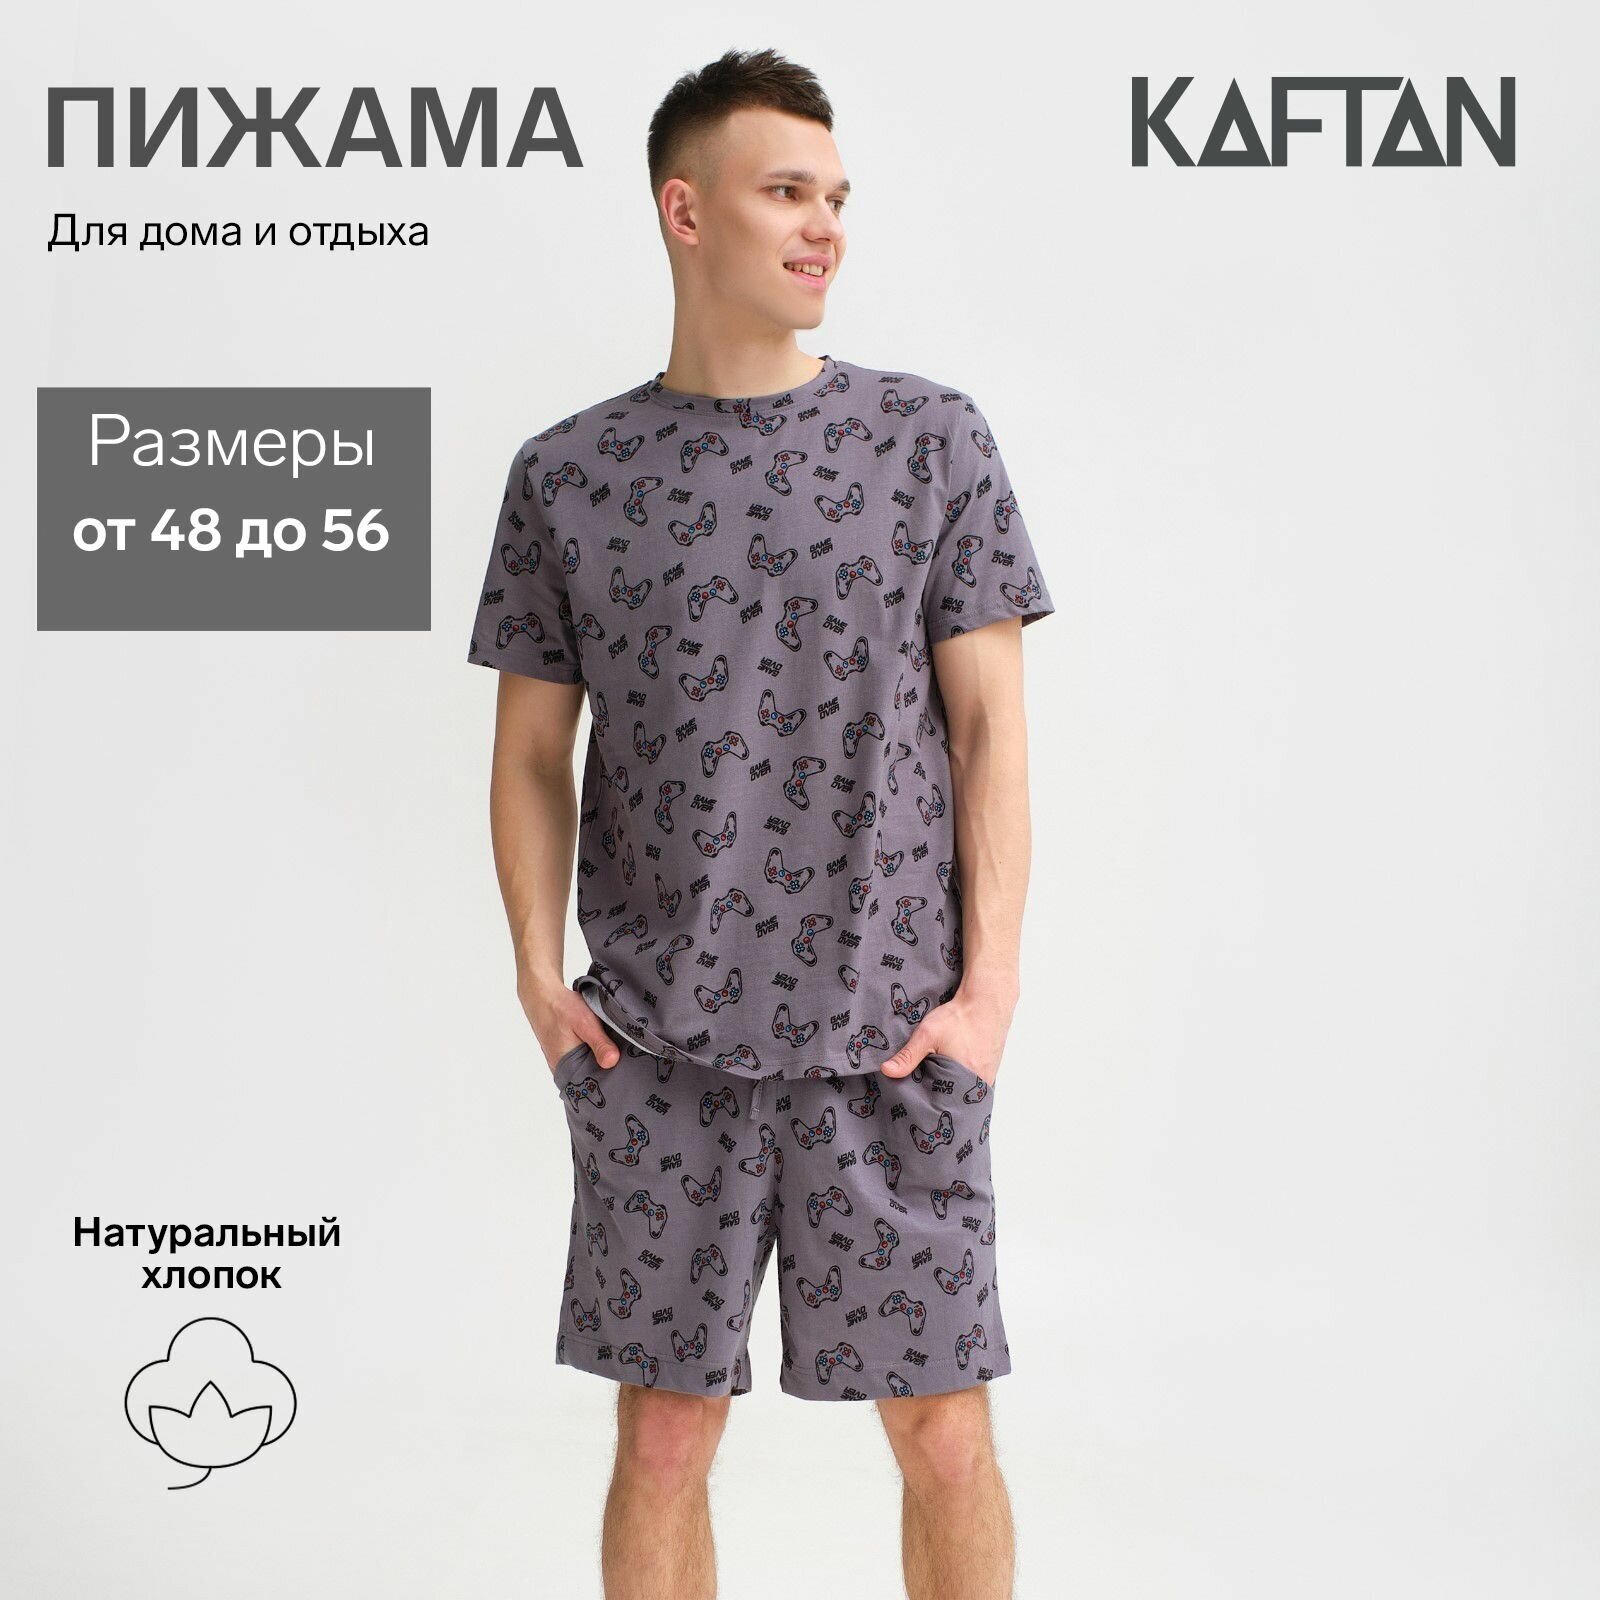 Пижама Kaftan, футболка, шорты, размер 48, серый - фотография № 1